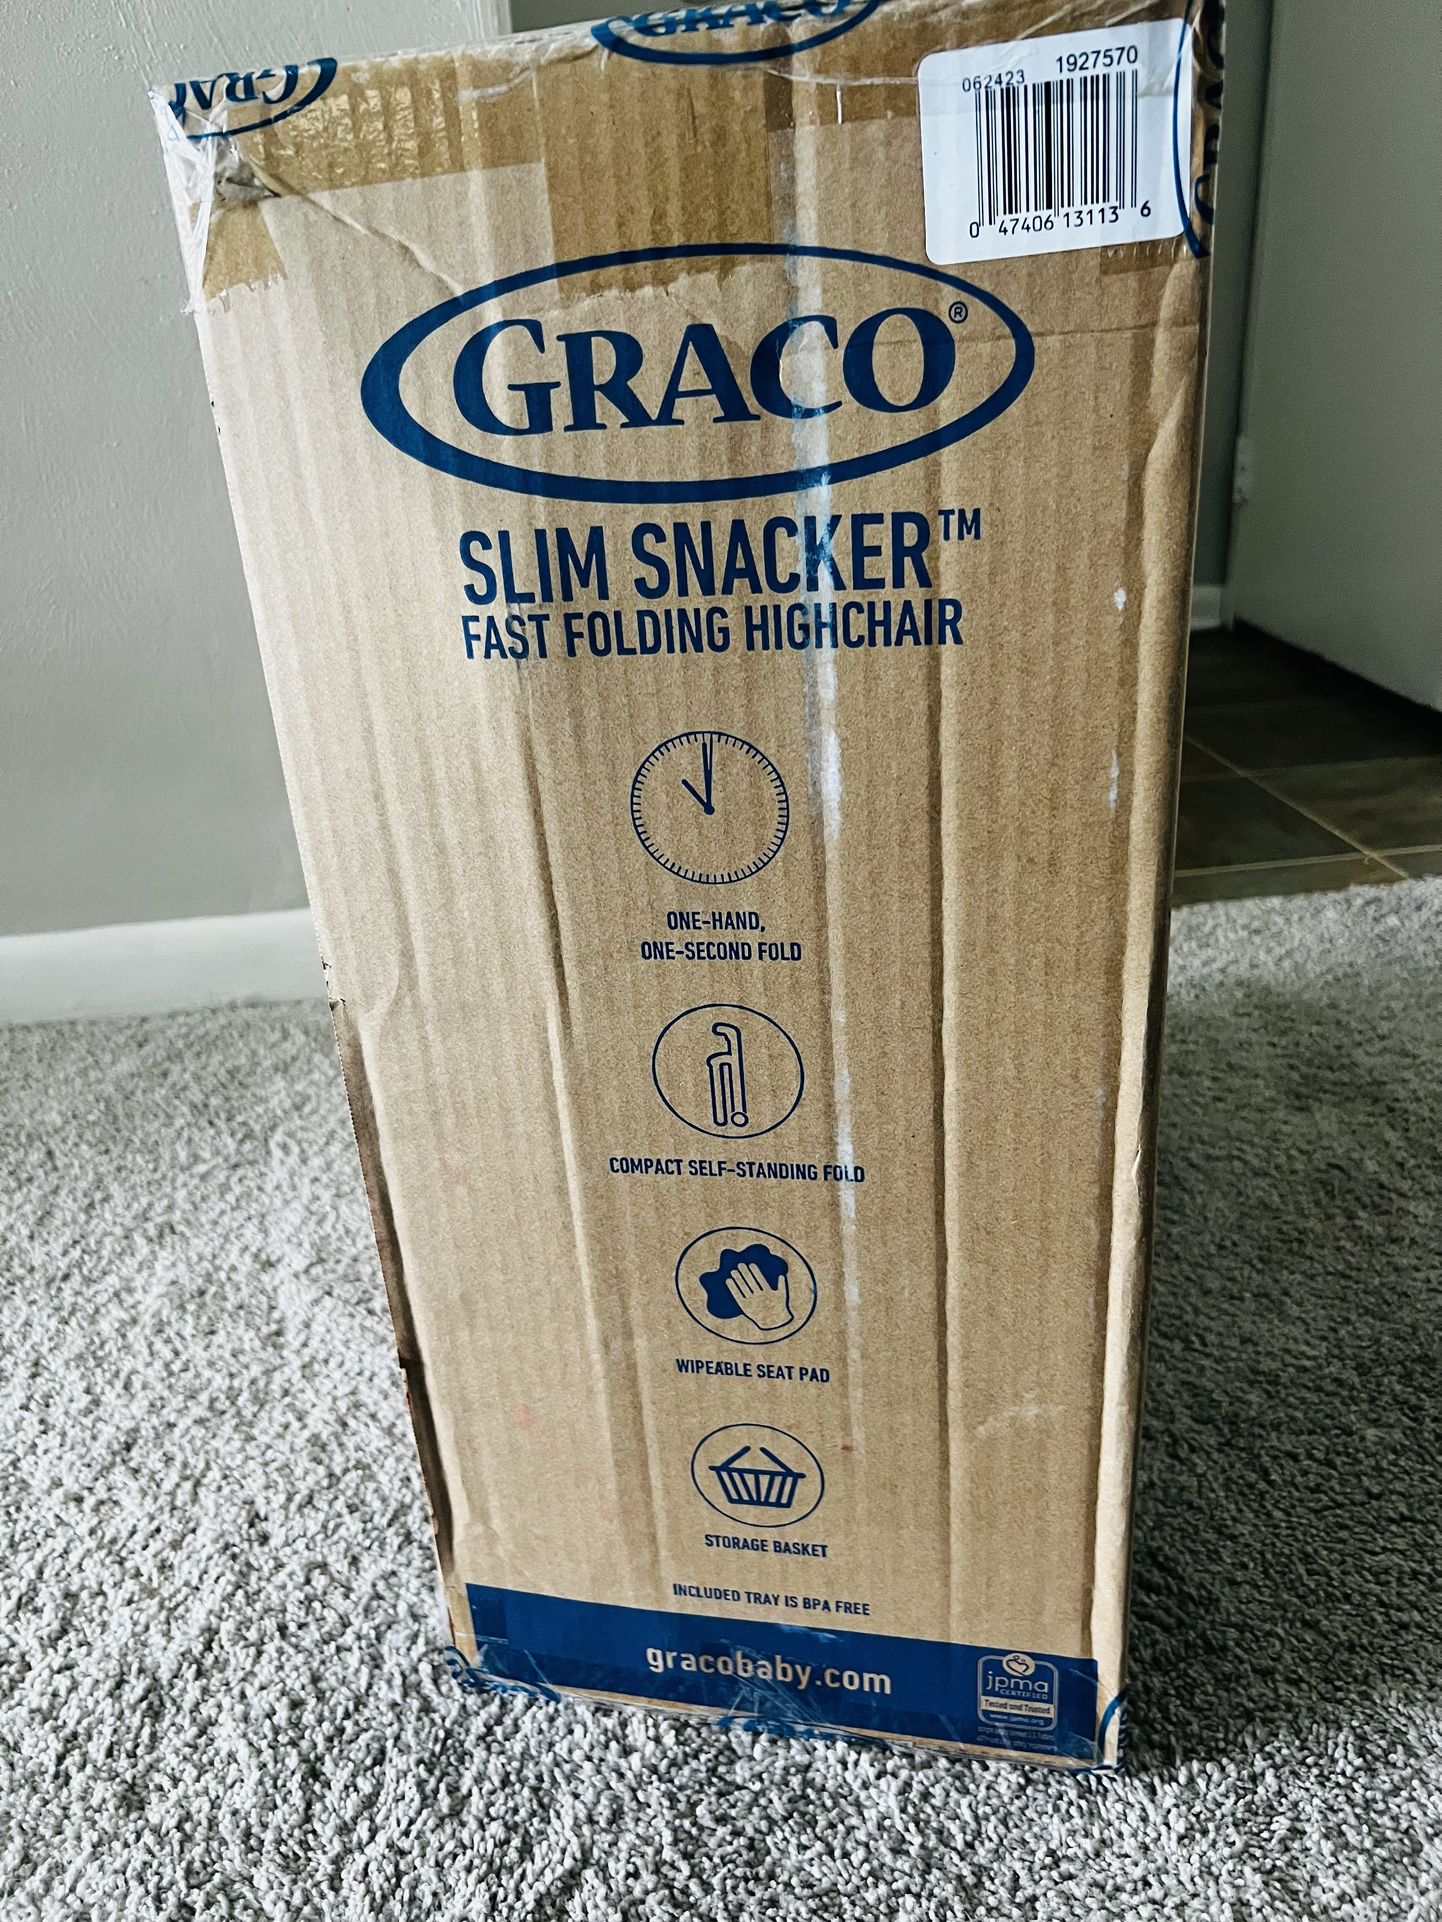 Graco slim snacker fast folding highchair